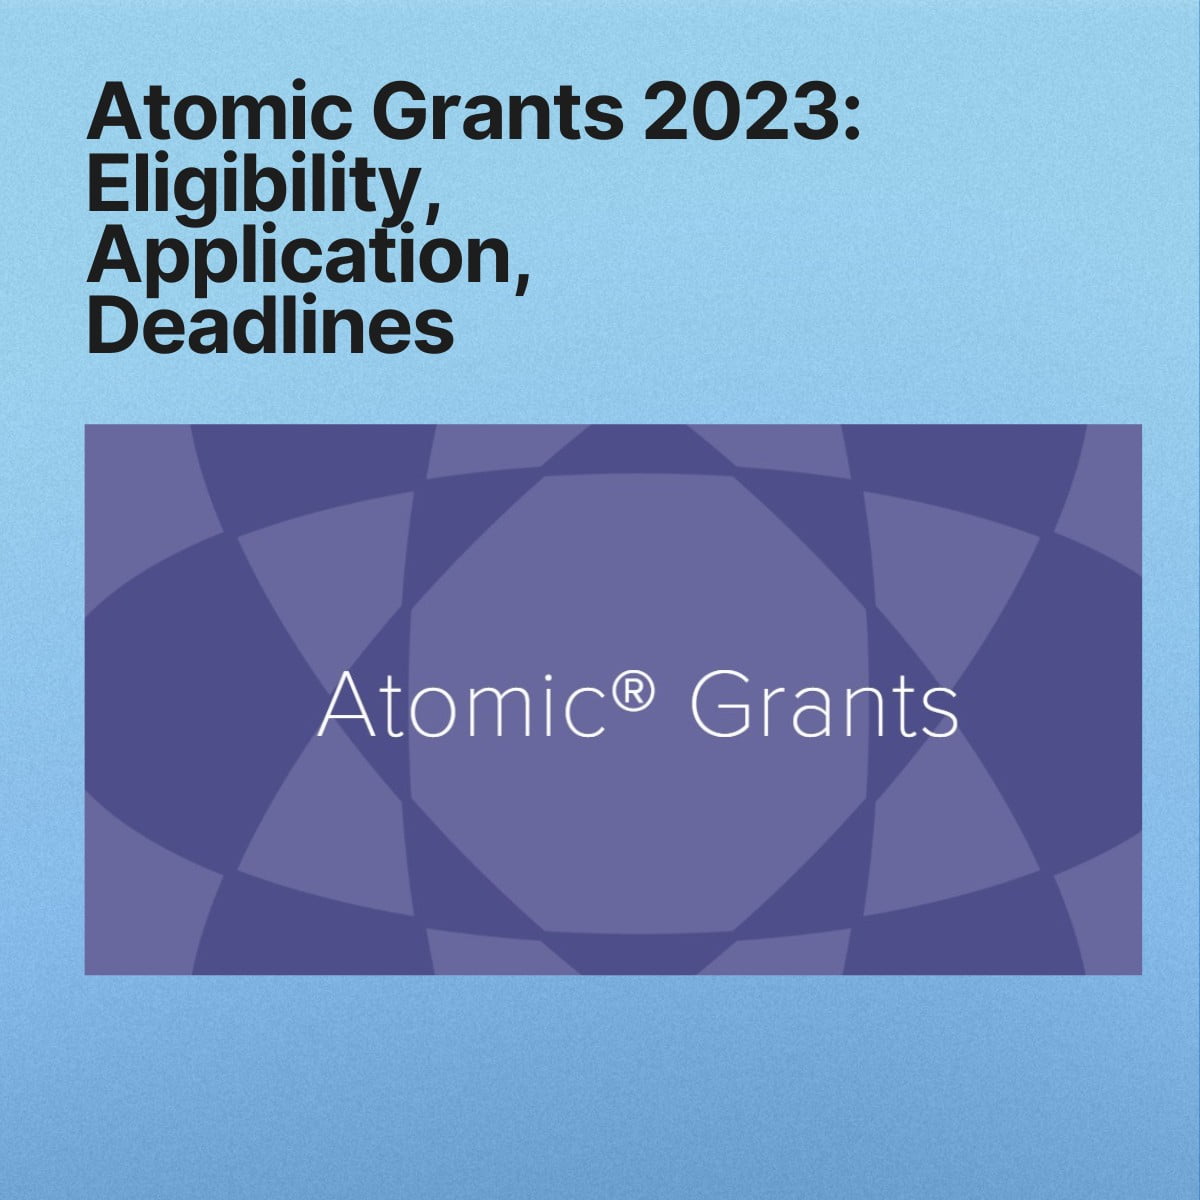 Atomic Grants 2023: Eligibility, Application, Deadlines